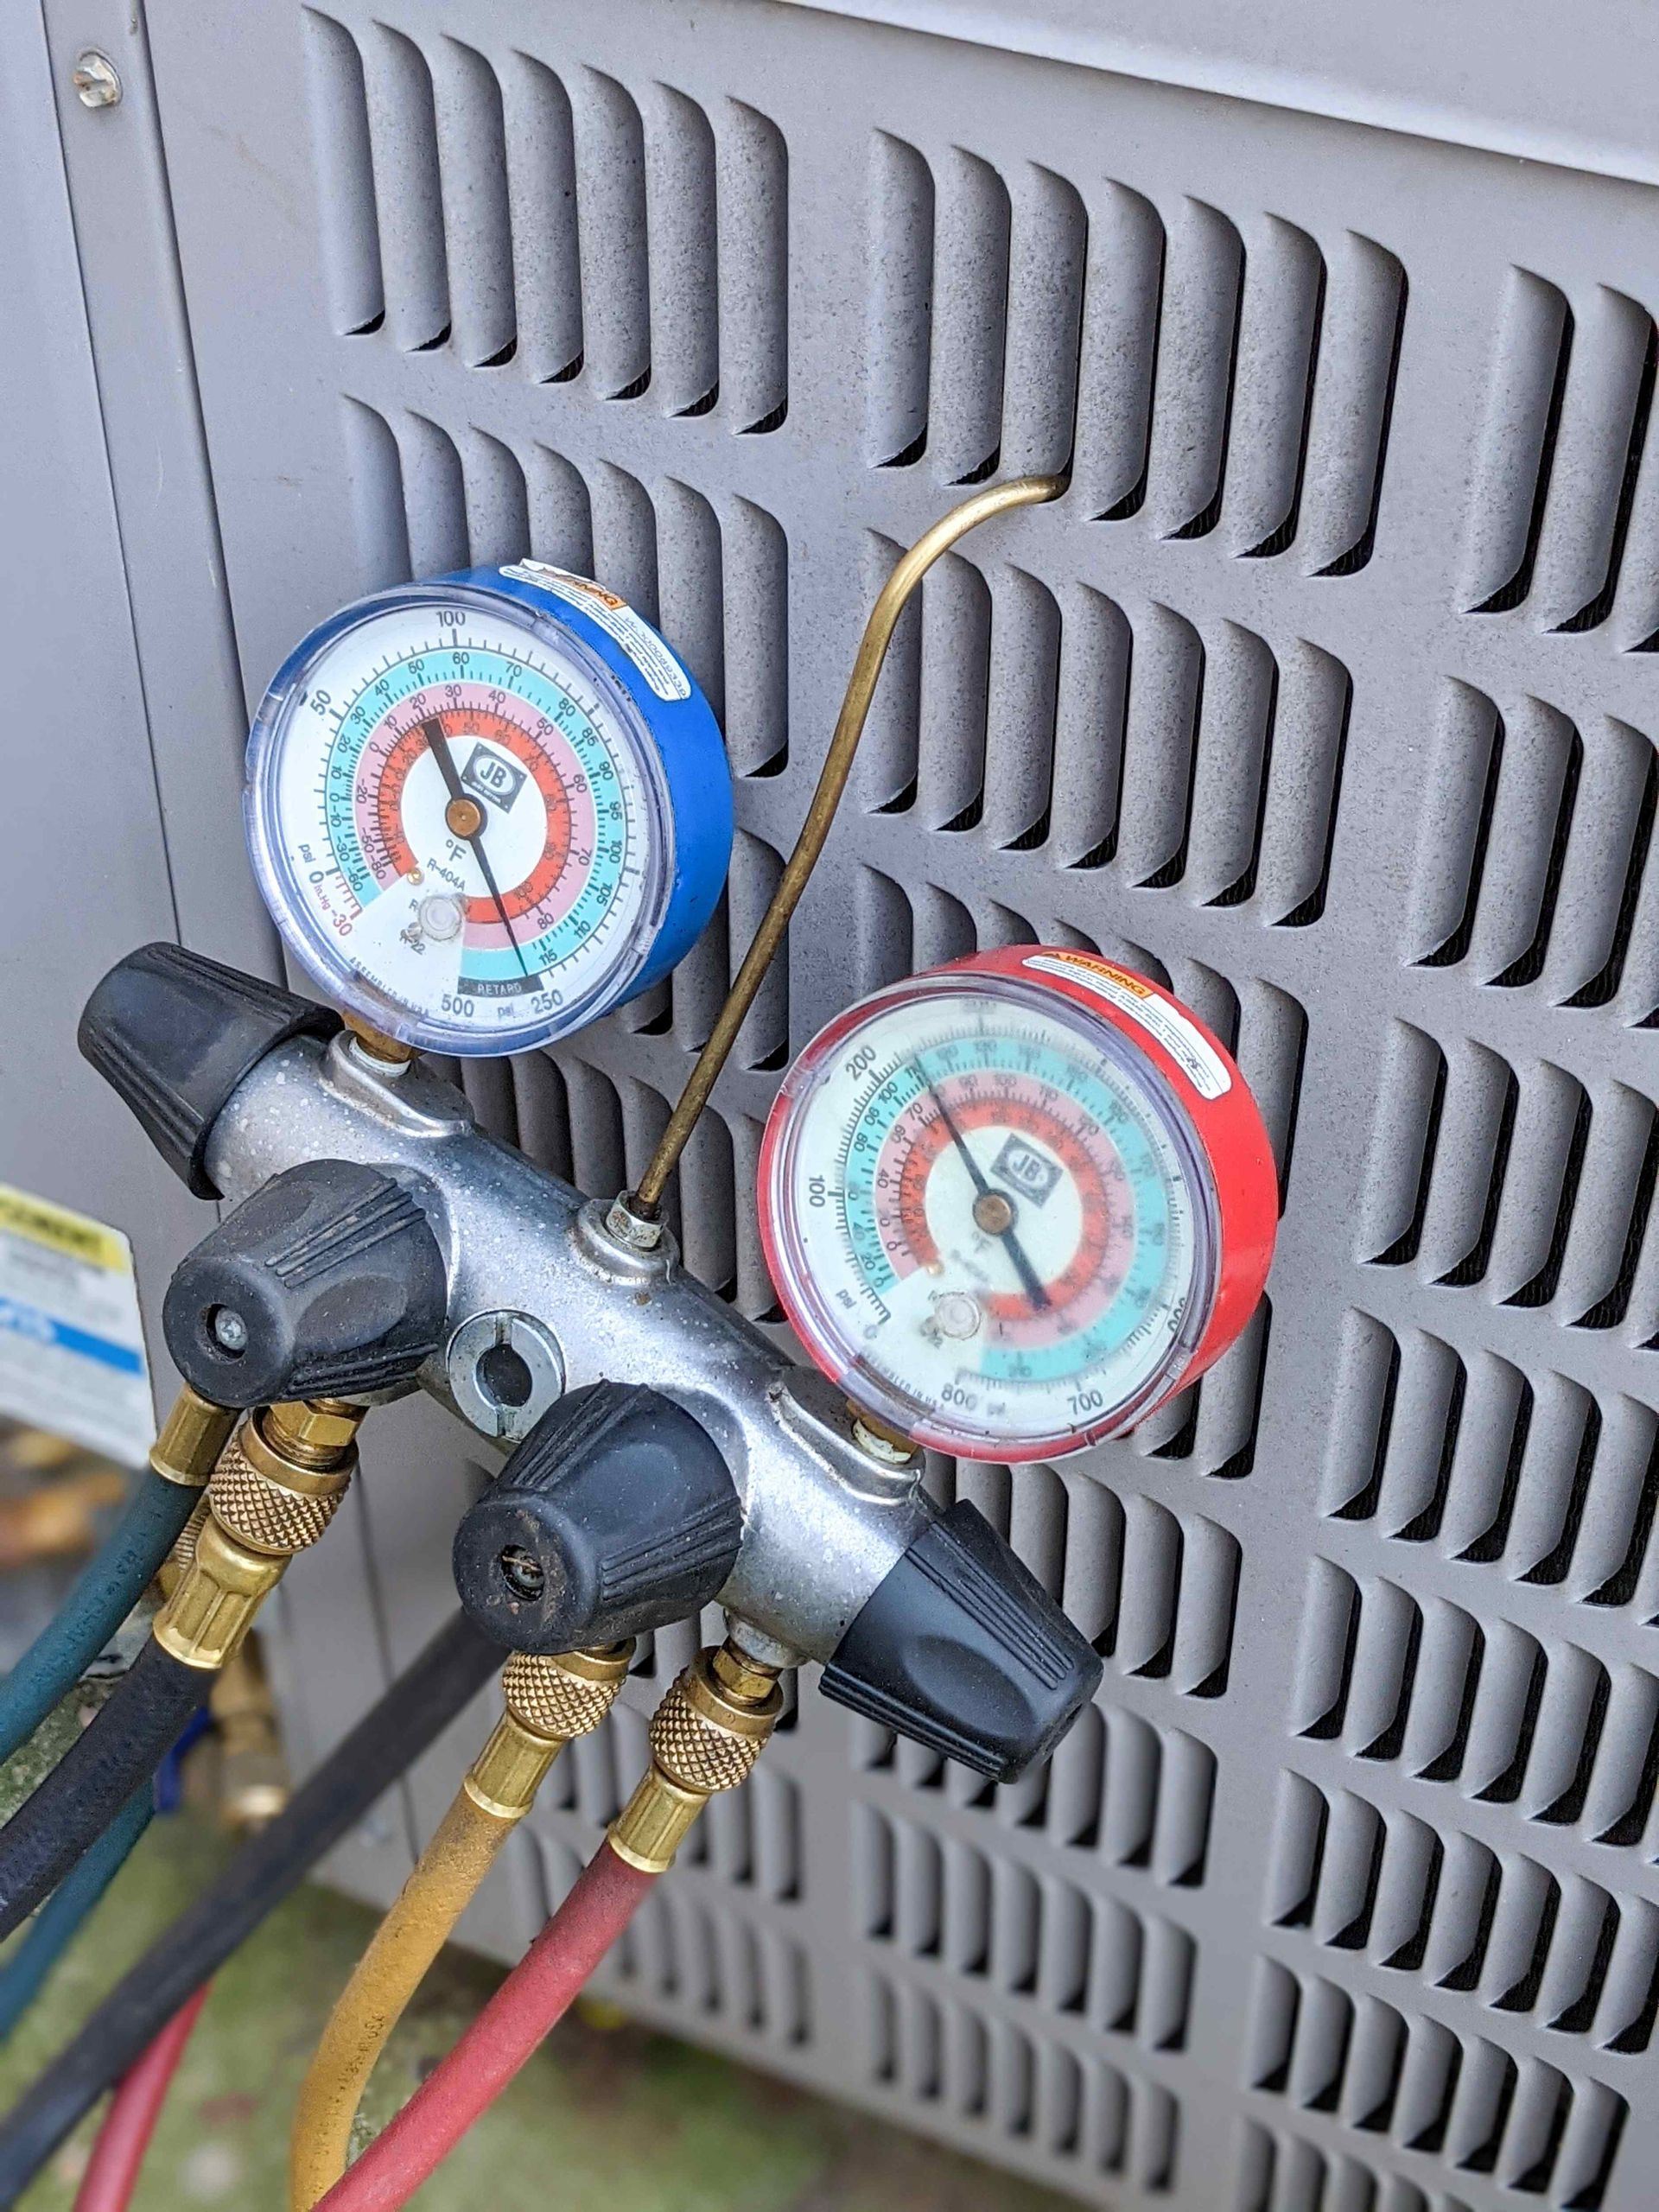 An AC gauge device